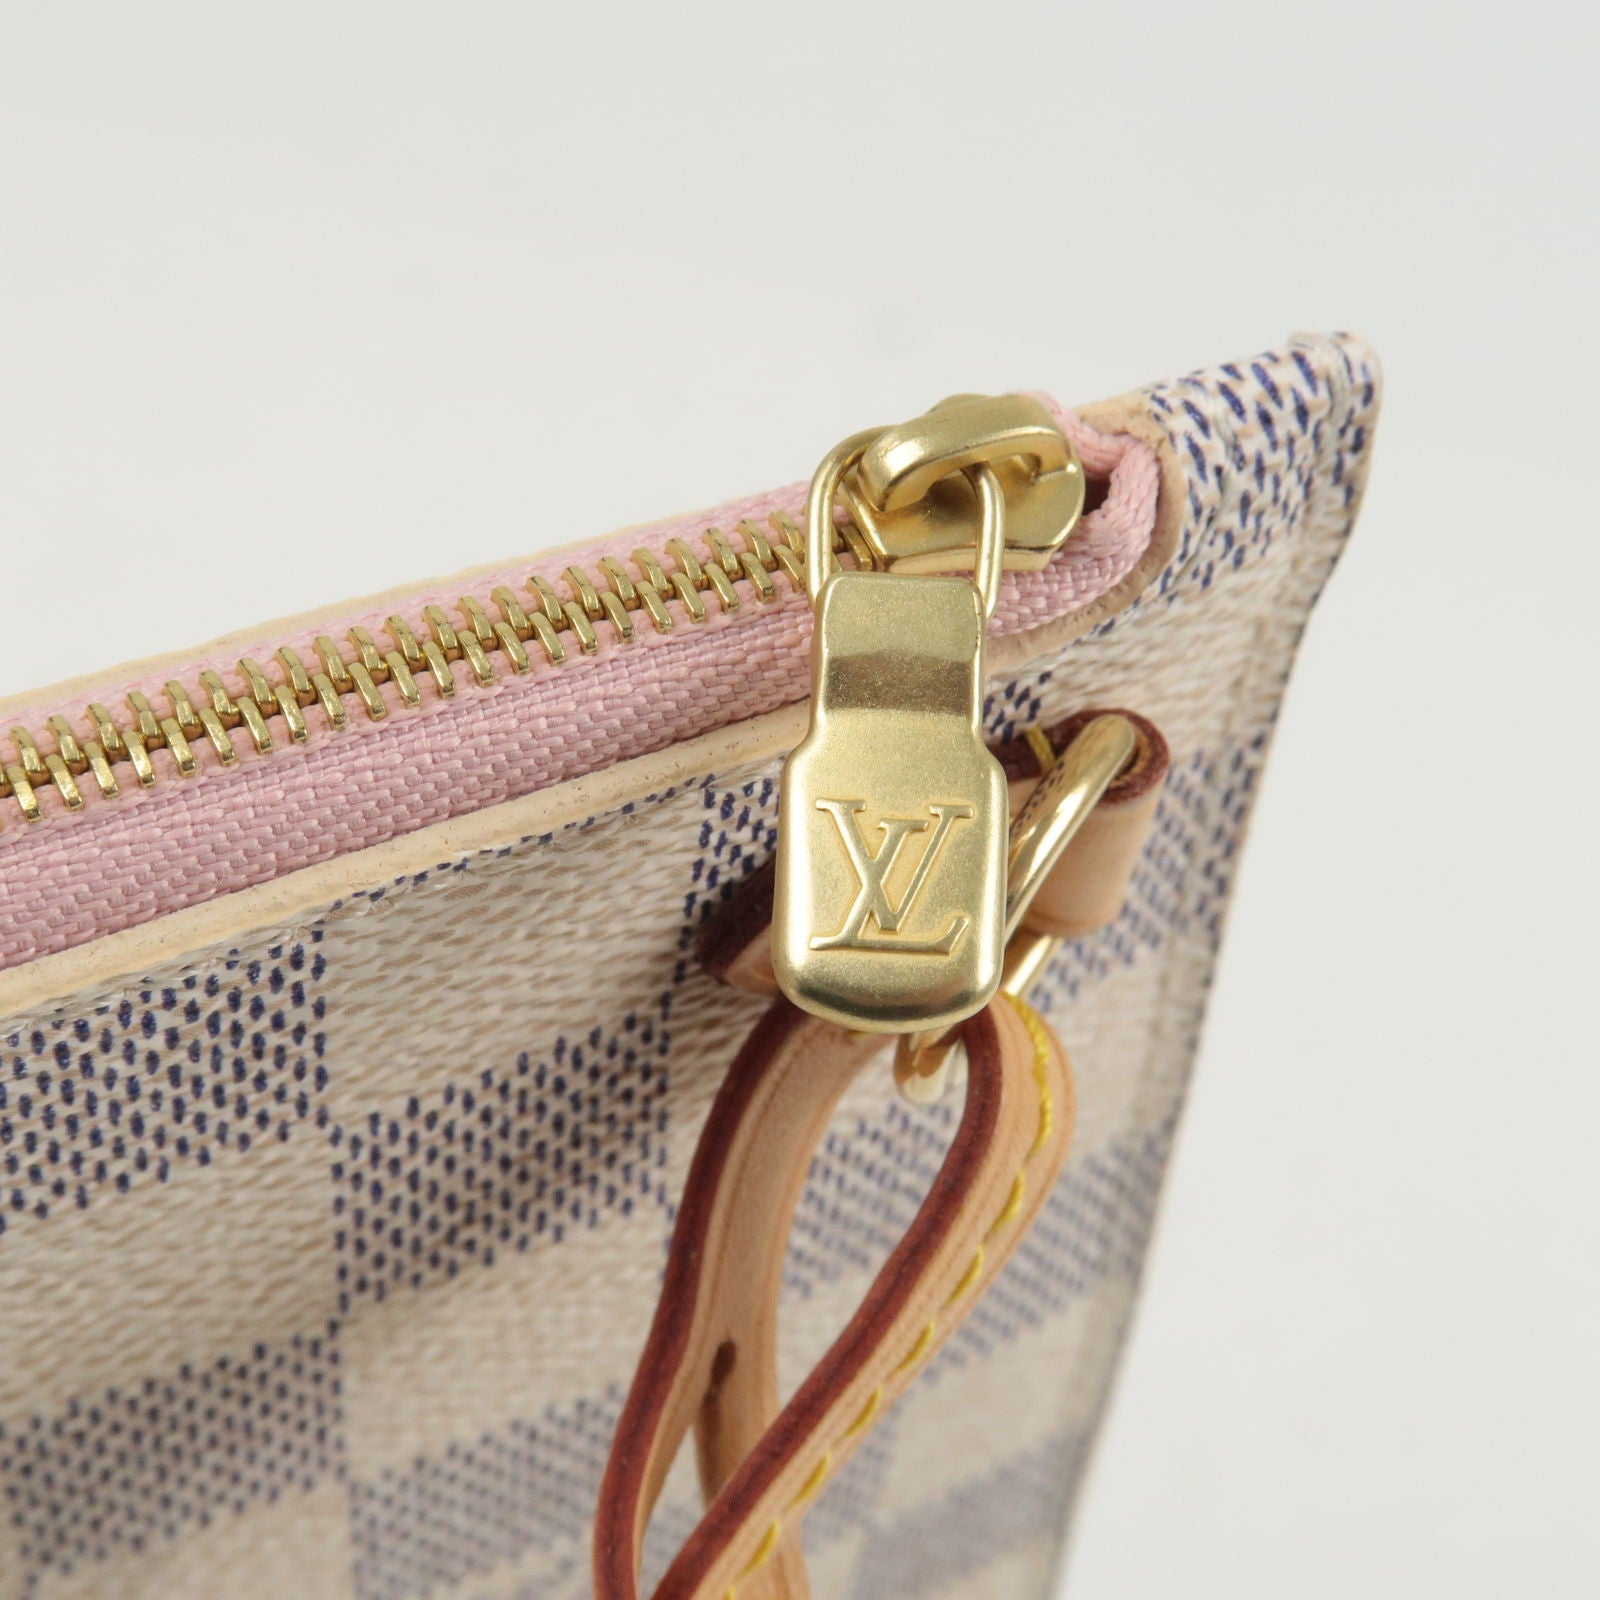 Louis Vuitton - Neverfull mm - Damier Azur Canvas - Rose Ballerine - Women - Handbag - Luxury